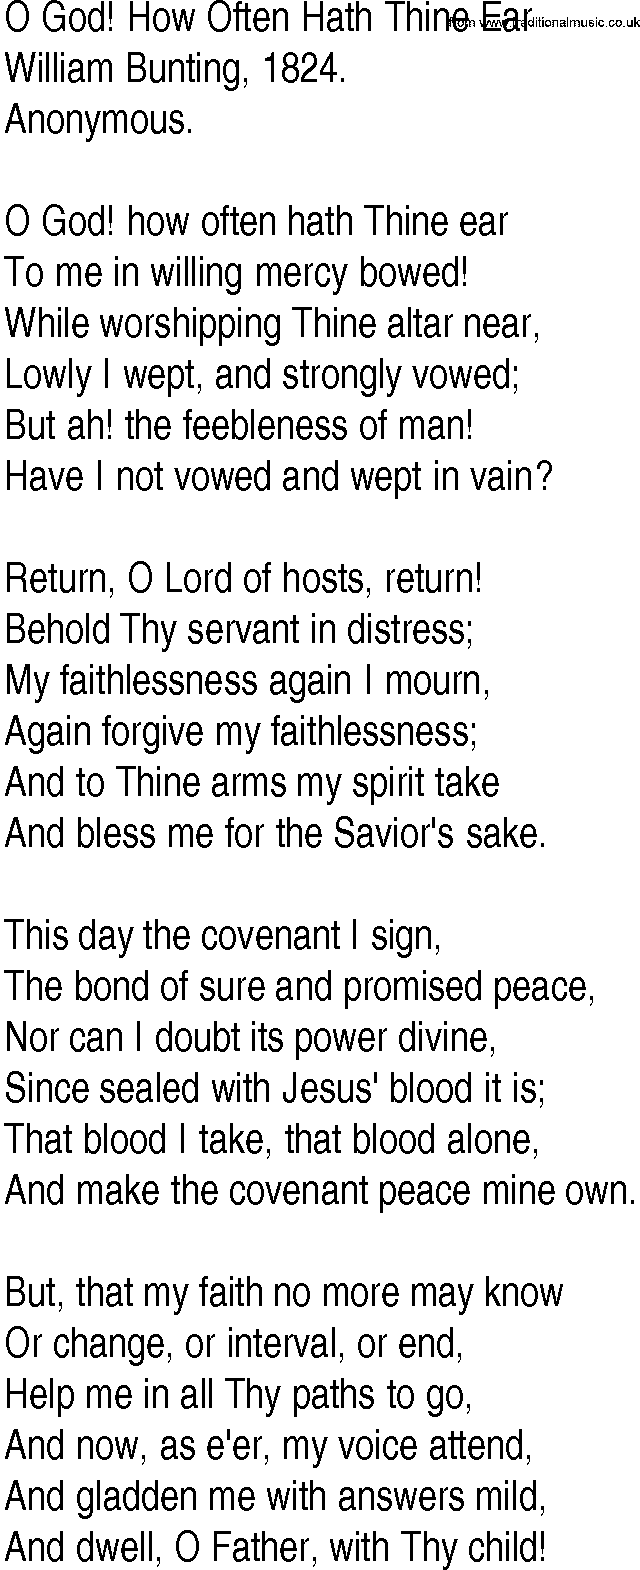 Hymn and Gospel Song: O God! How Often Hath Thine Ear by William Bunting lyrics